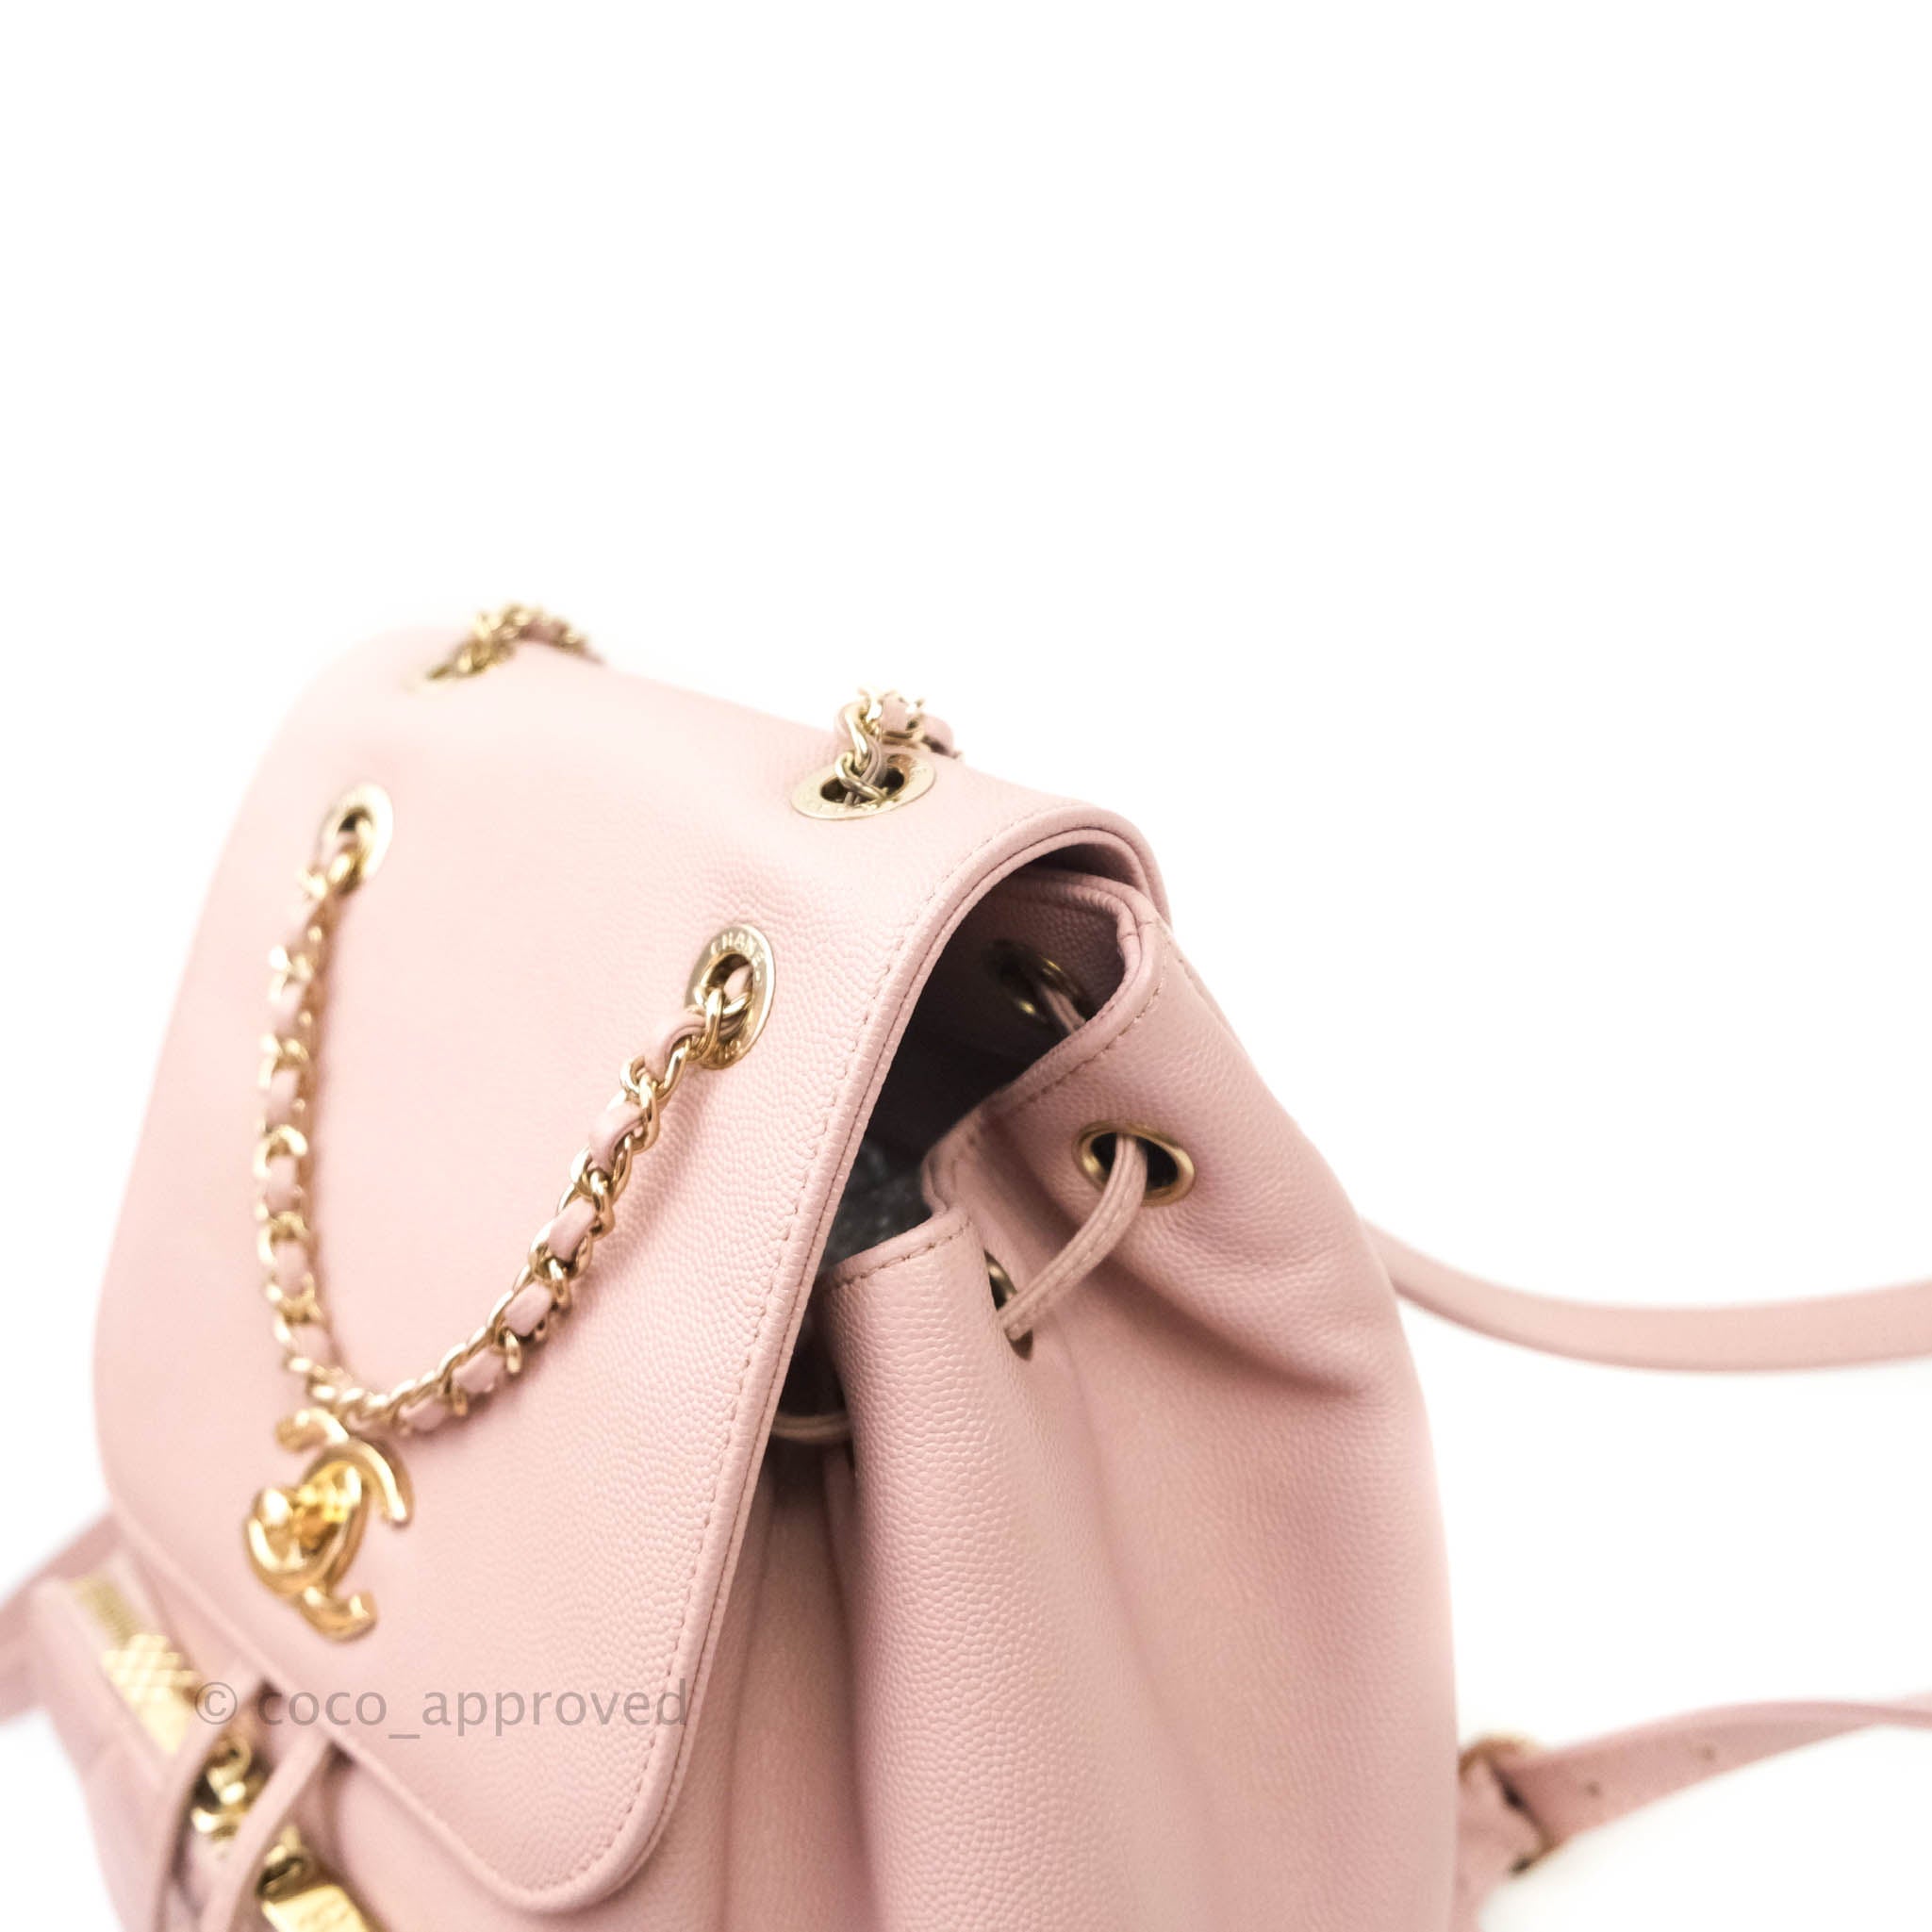 Chanel Business Affinity Backpack - Designer WishBags